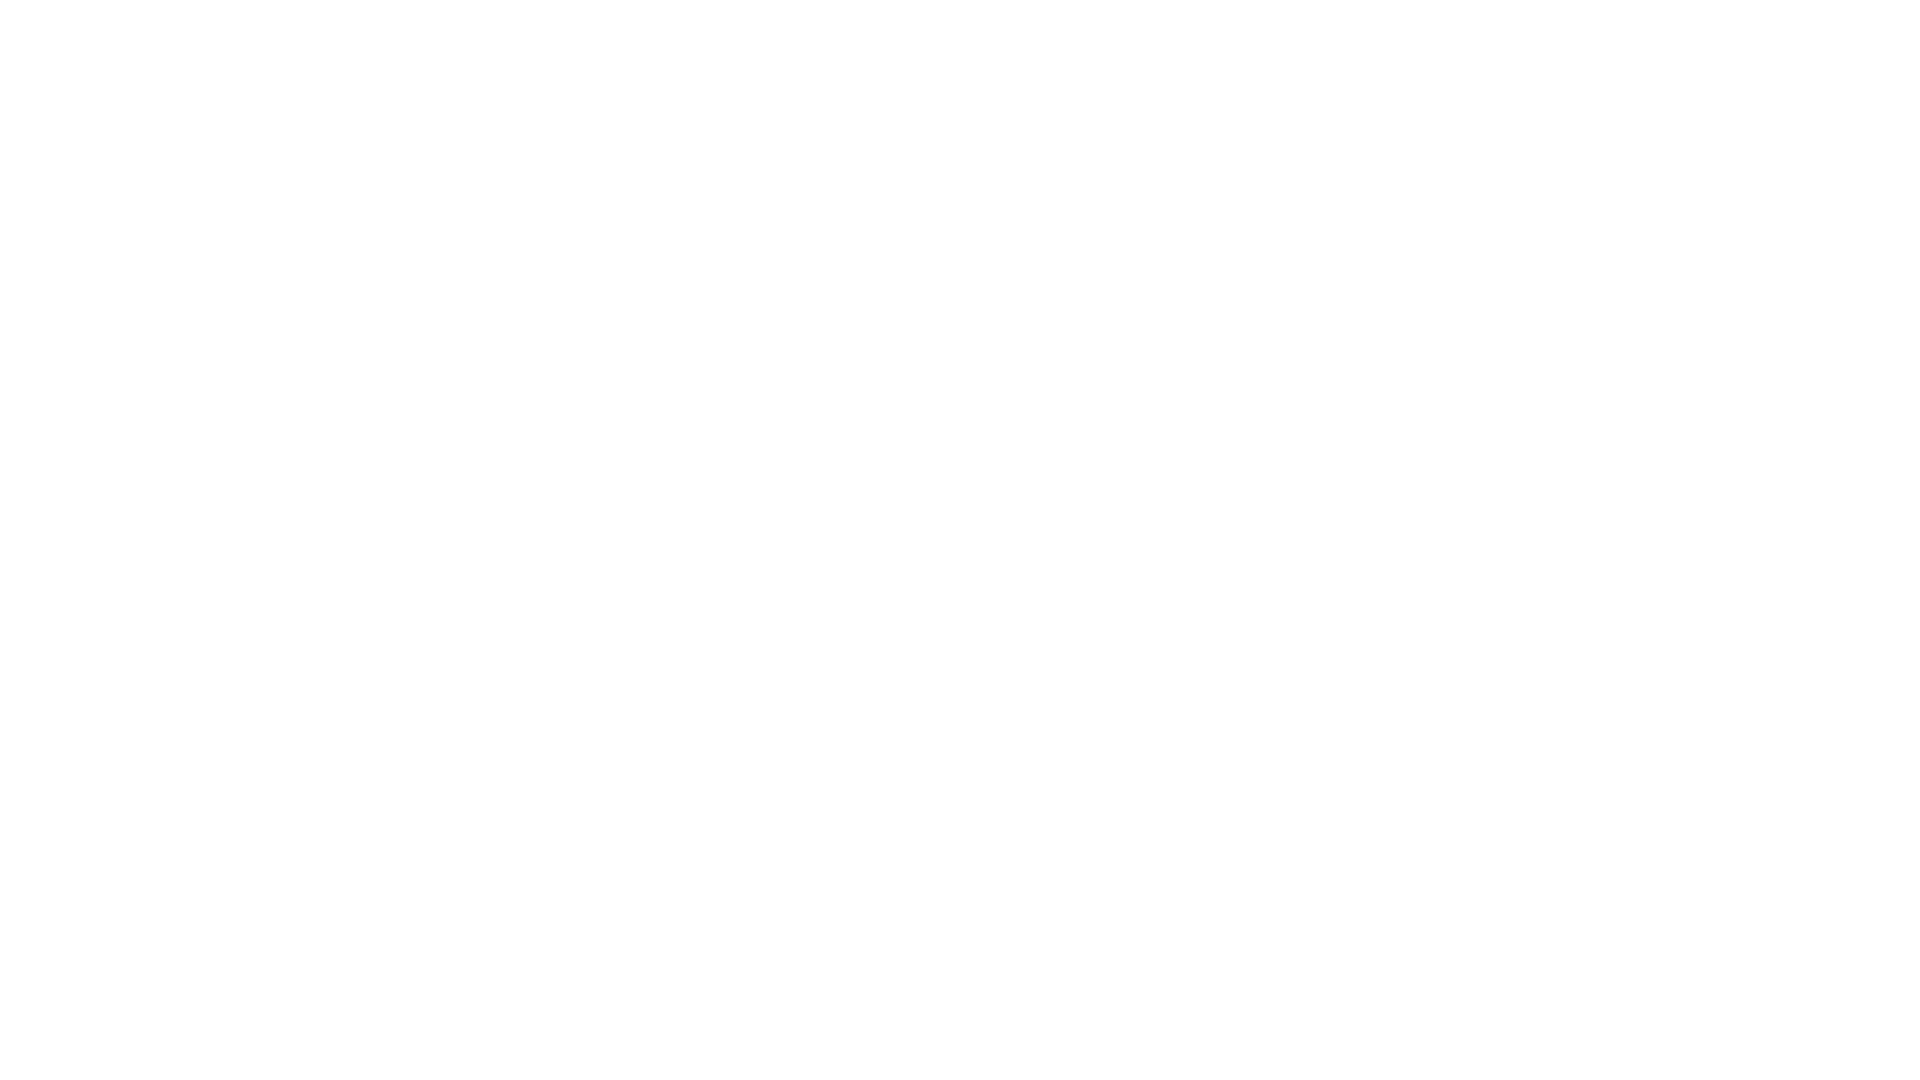 Jim C Wilson